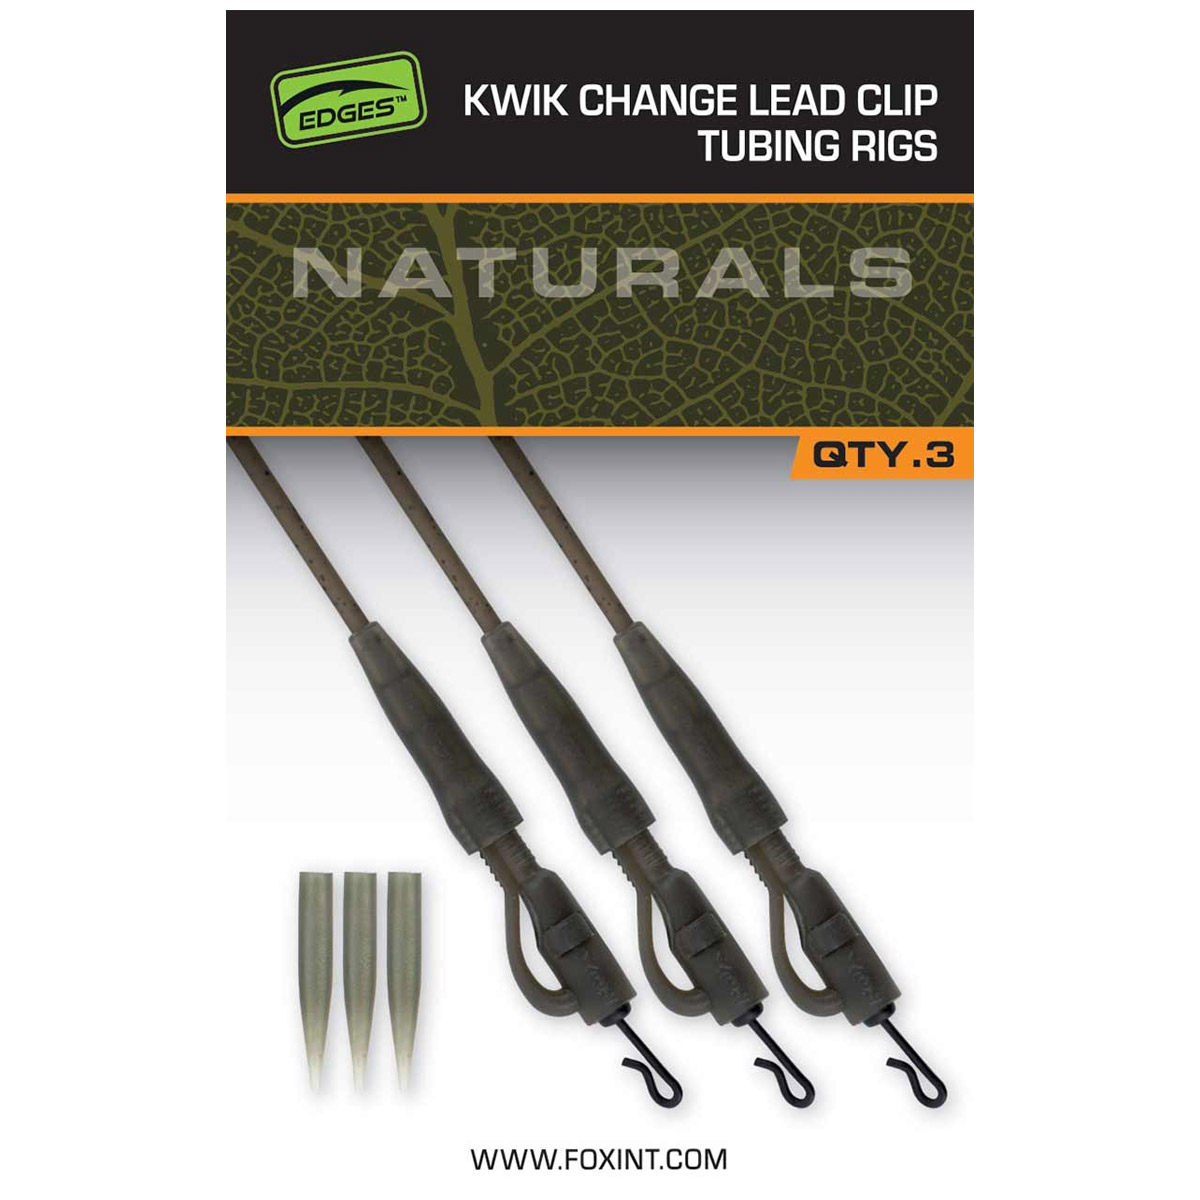 Fox Edges™ Naturals Kwik Change Lead Clip Tubing Rigs